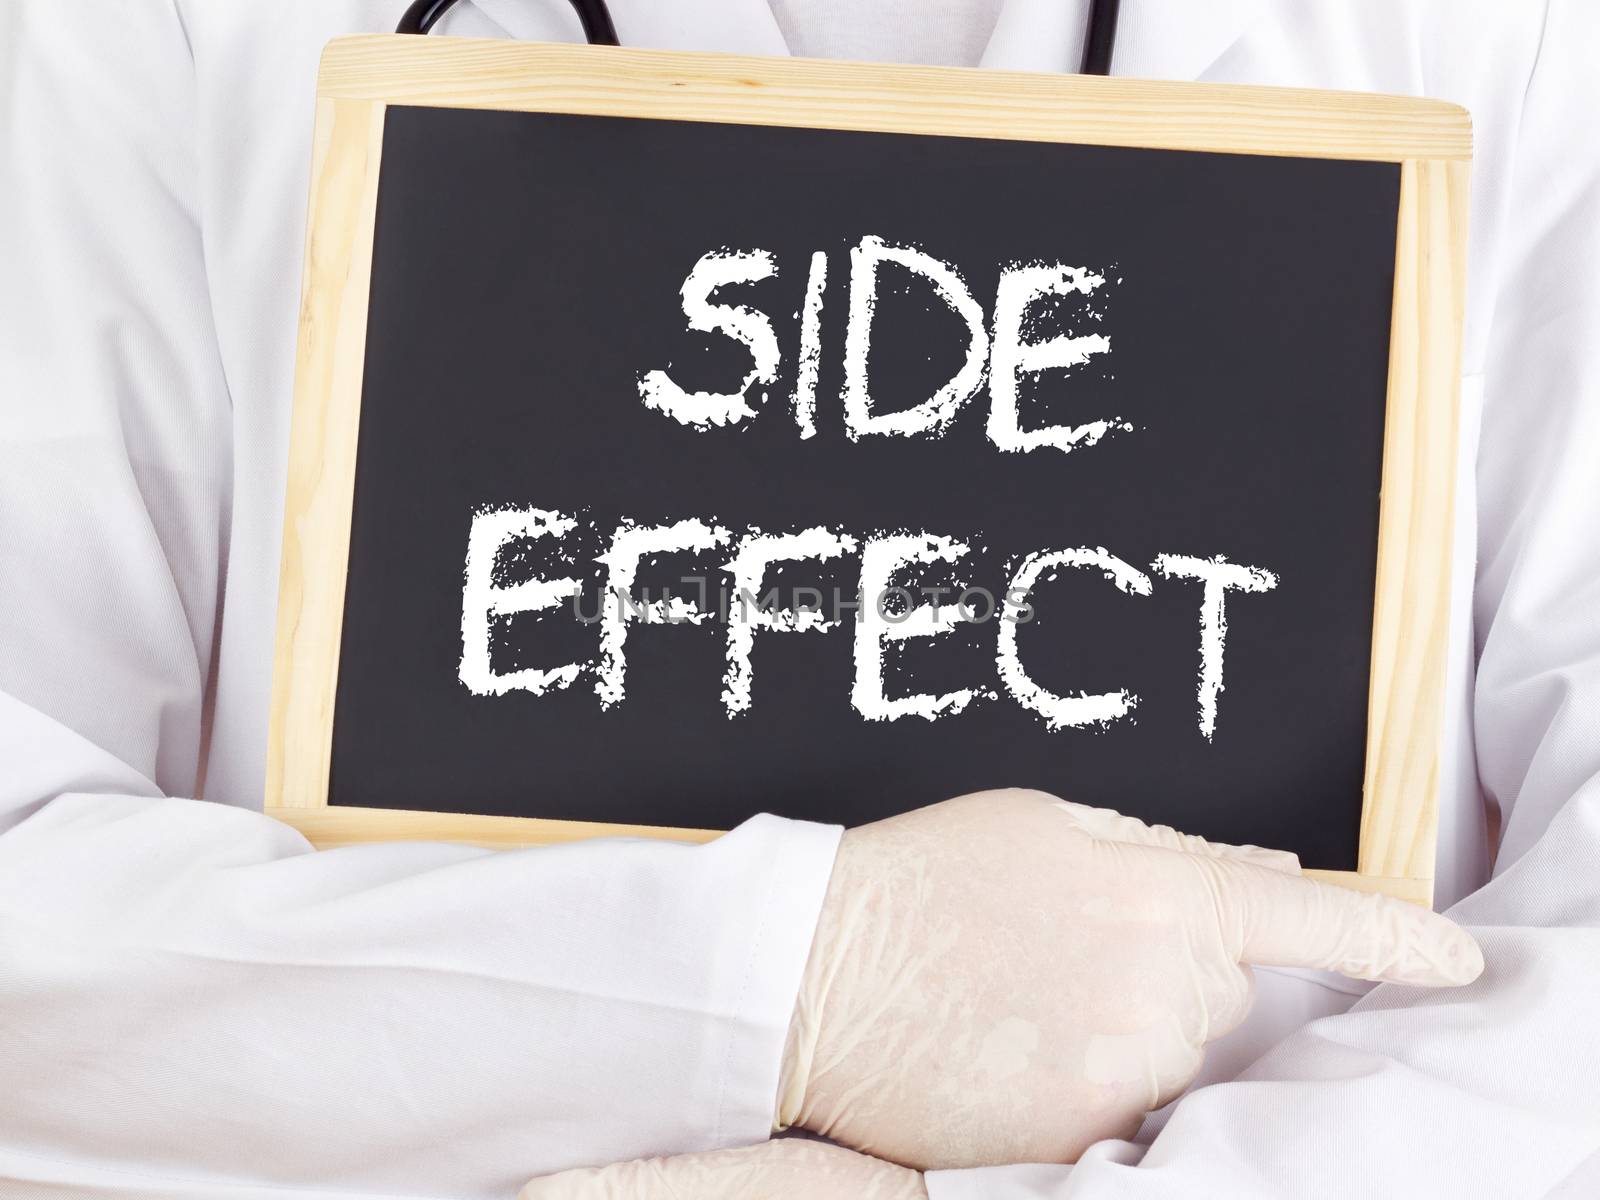 Doctor shows information on blackboard: side effect by gwolters